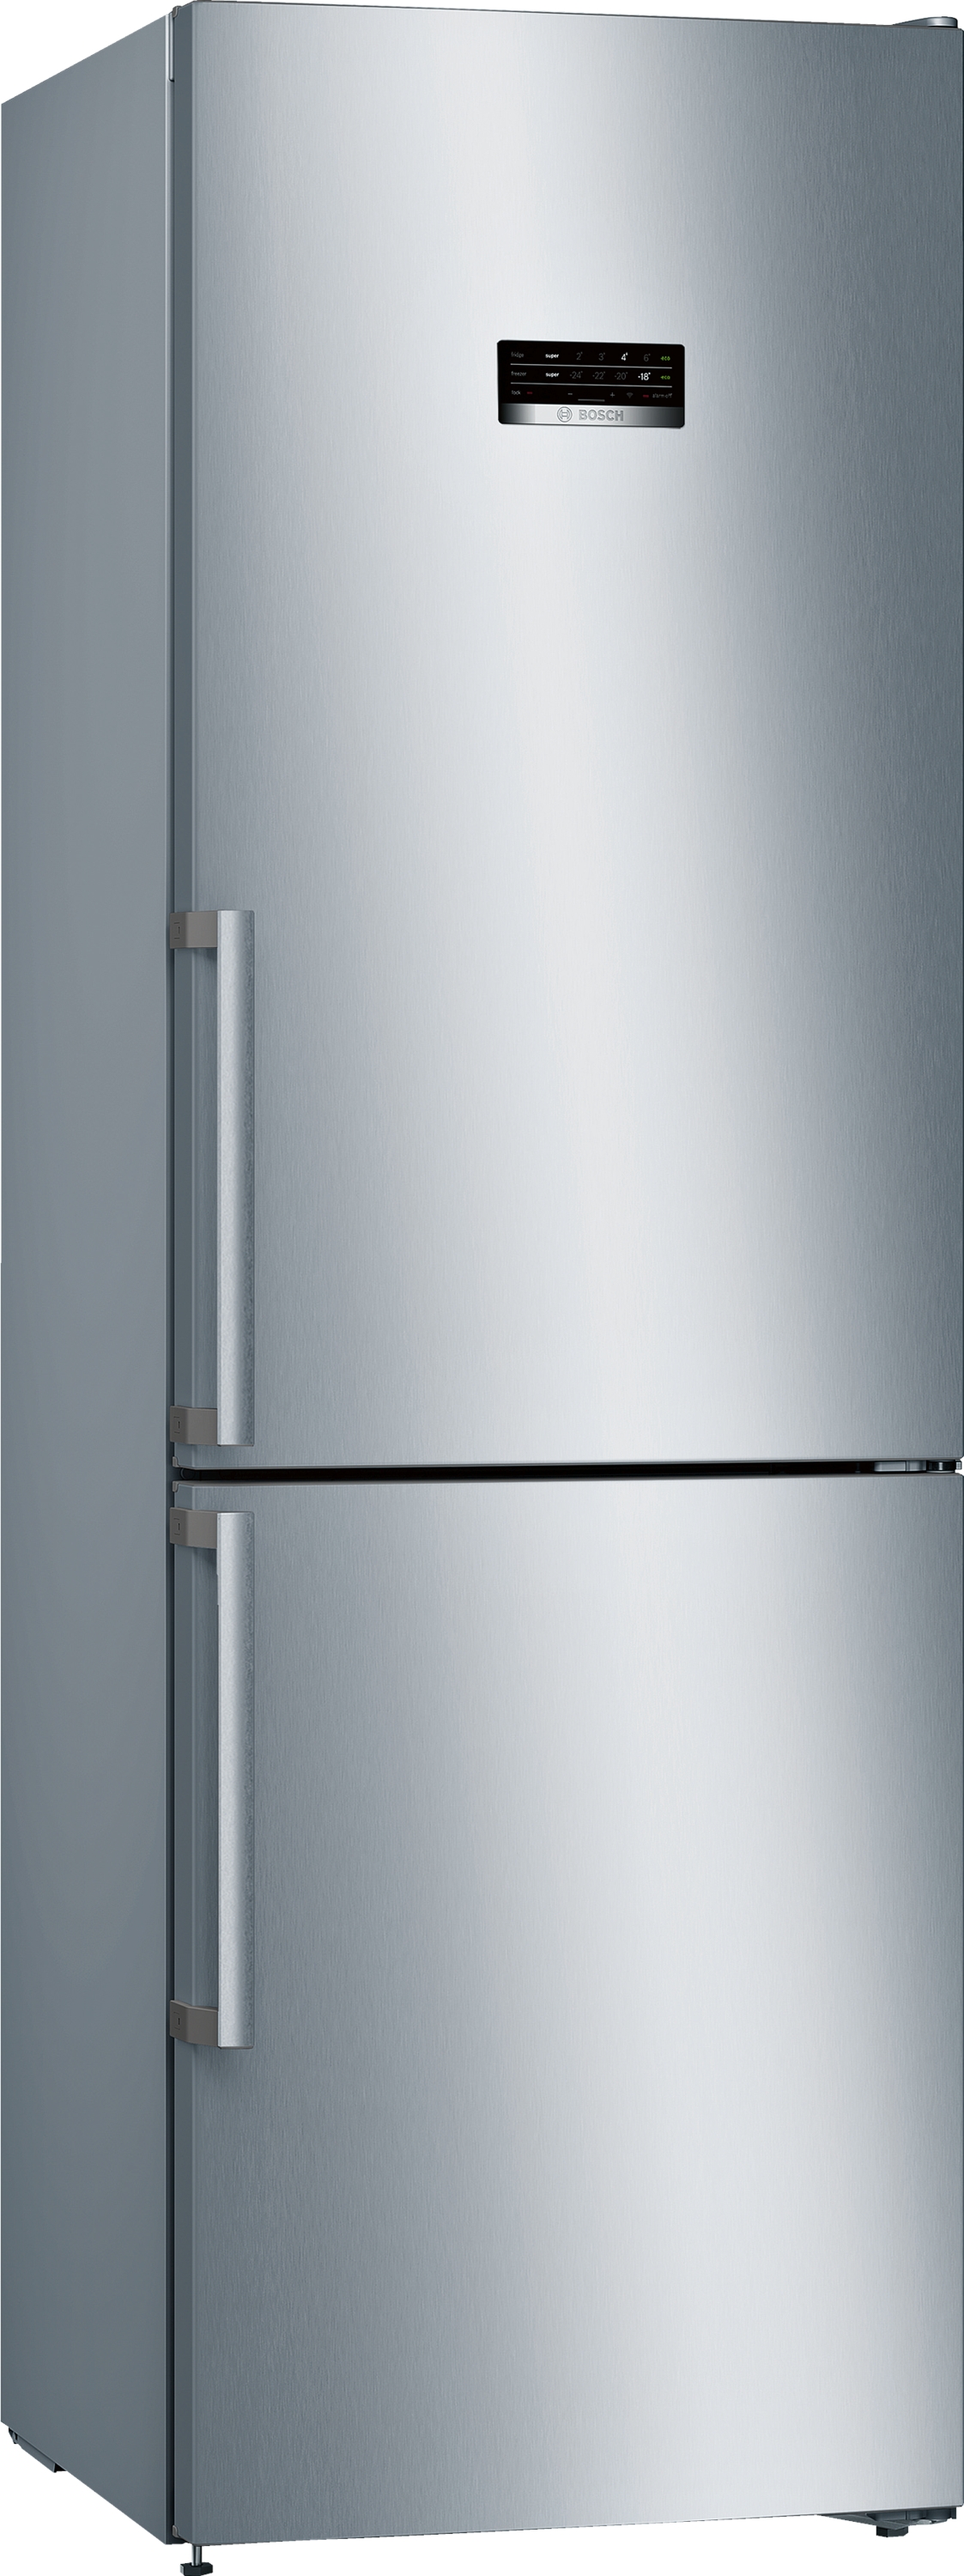 KGN36XLEQ, Samostojeći frižider sa zamrzivačem dole